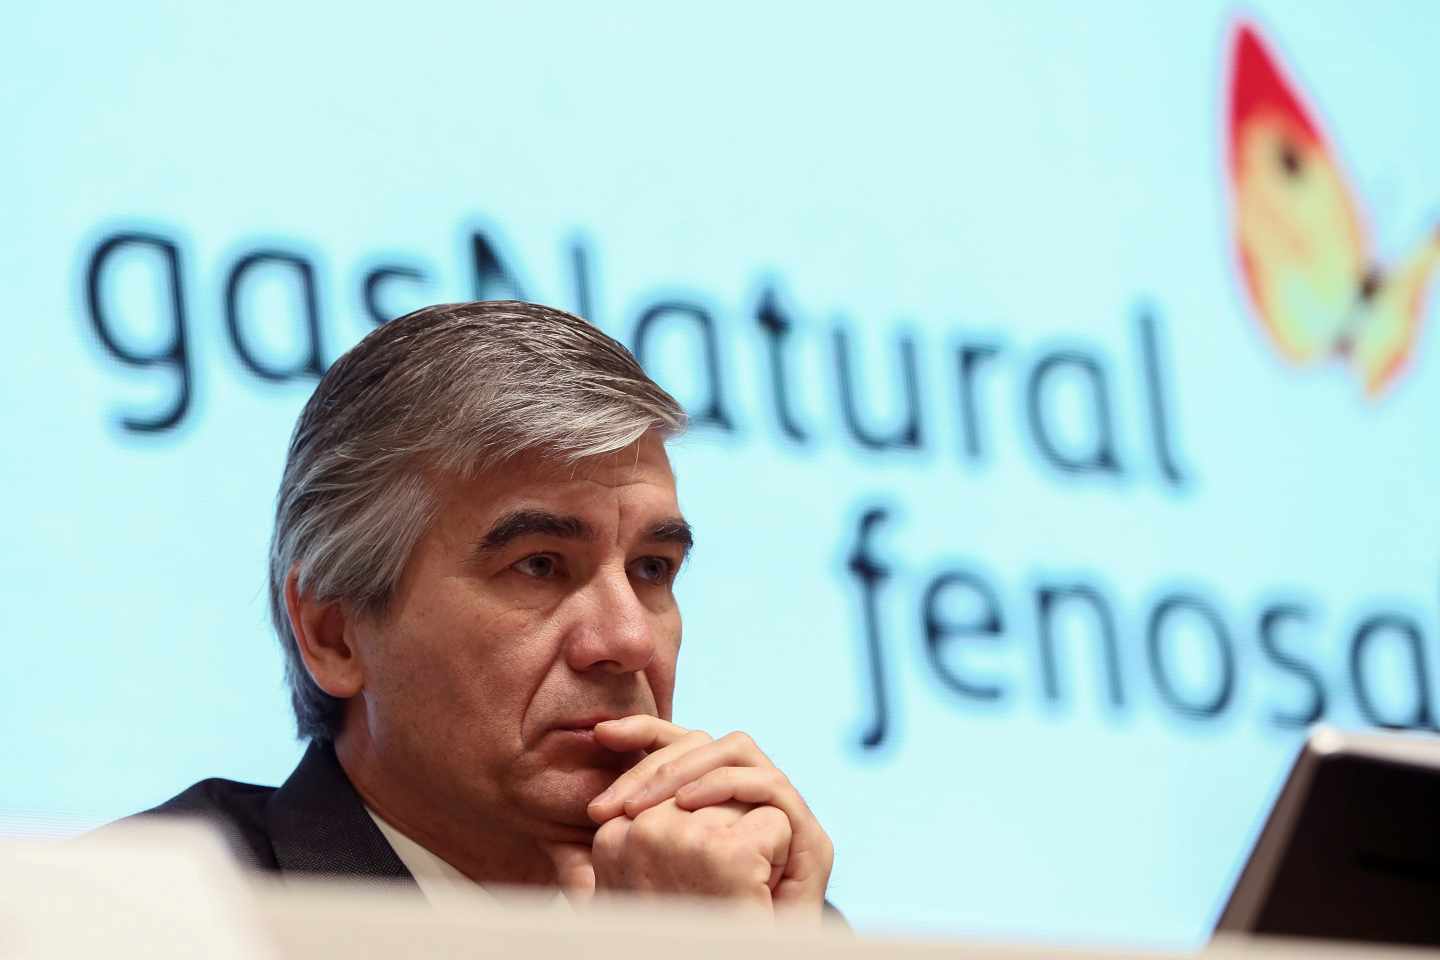 El presidente ejecutivo de Gas Natural Fenosa, Francisco Reynés.